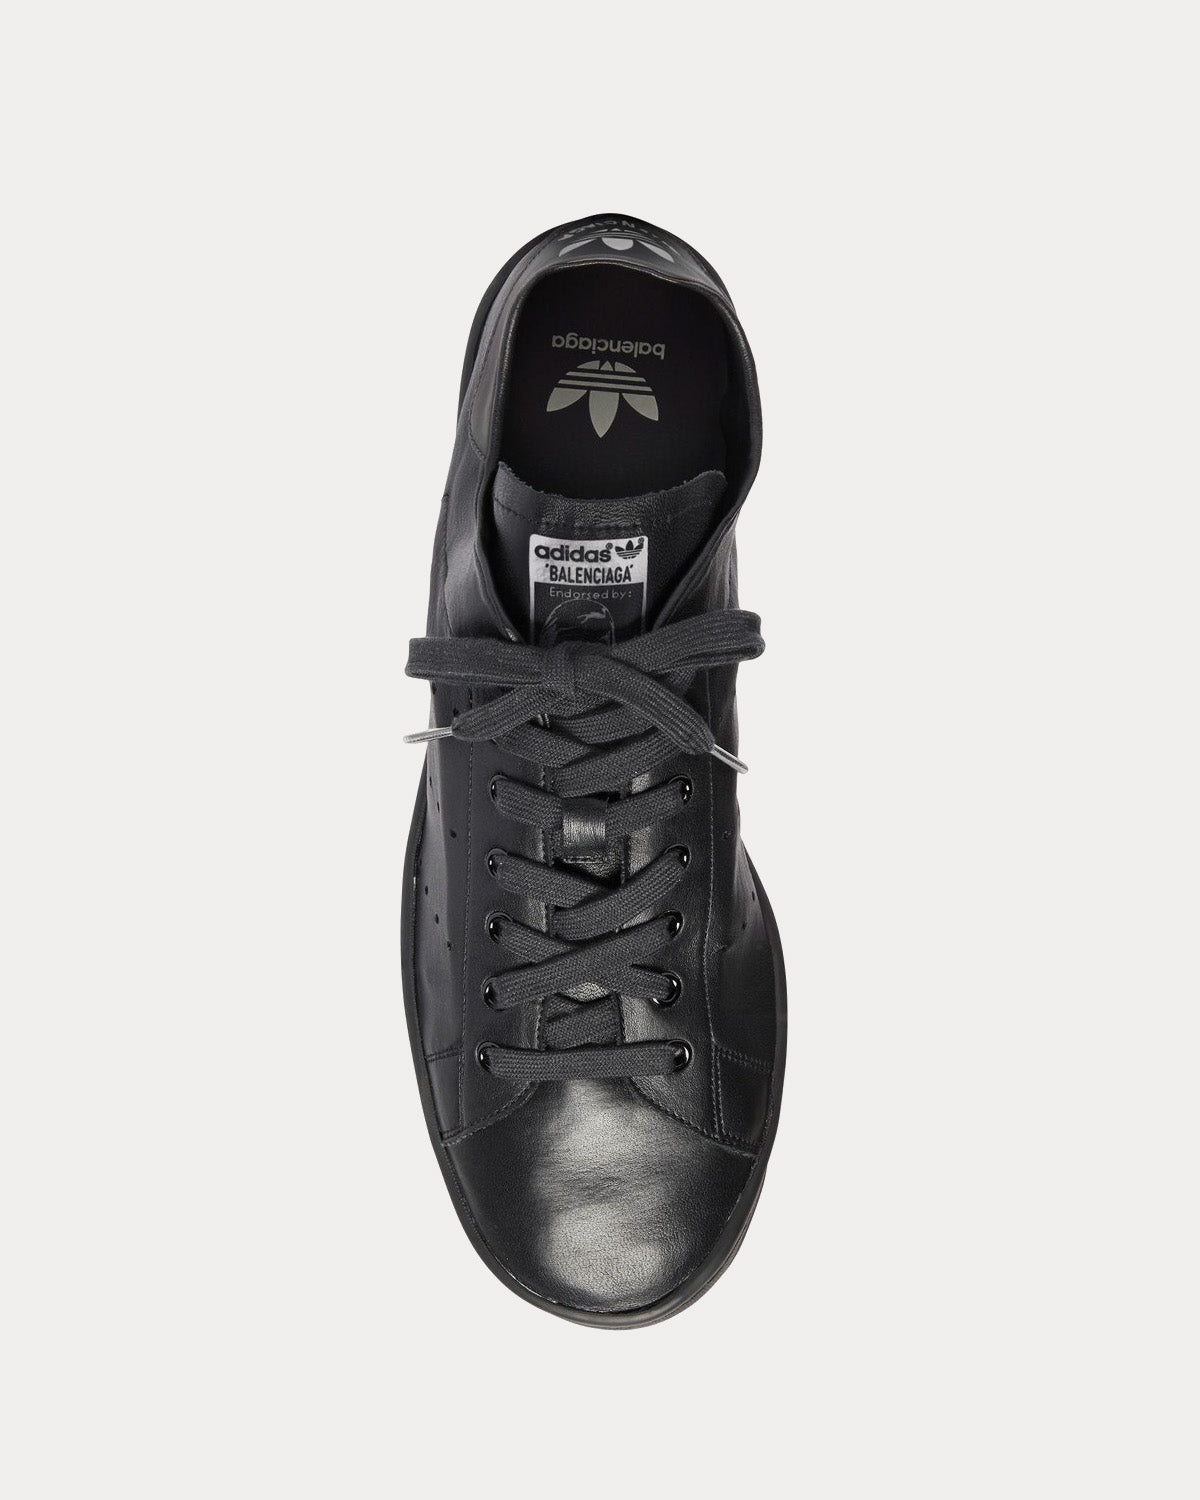 Balenciaga x Adidas - Stan Smith Leather Black Low Top Sneakers